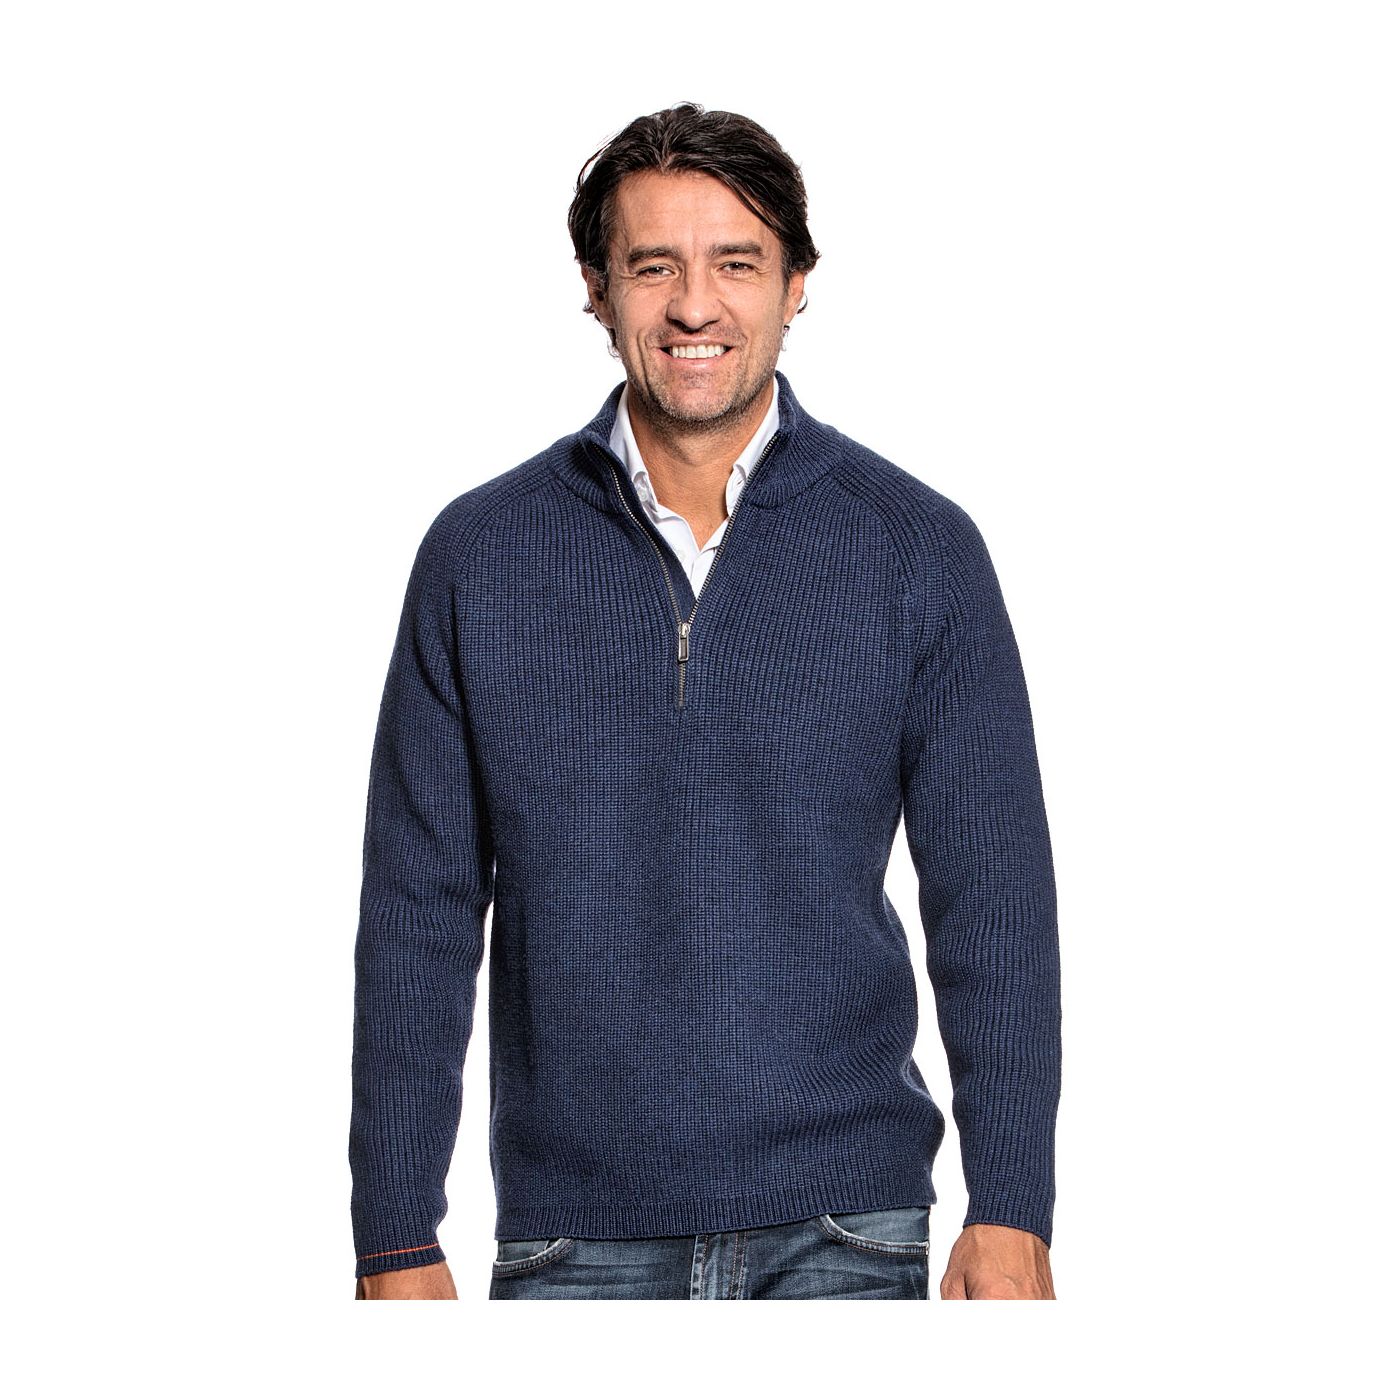 Fisherman sweater for men made of Merino wool in Blue